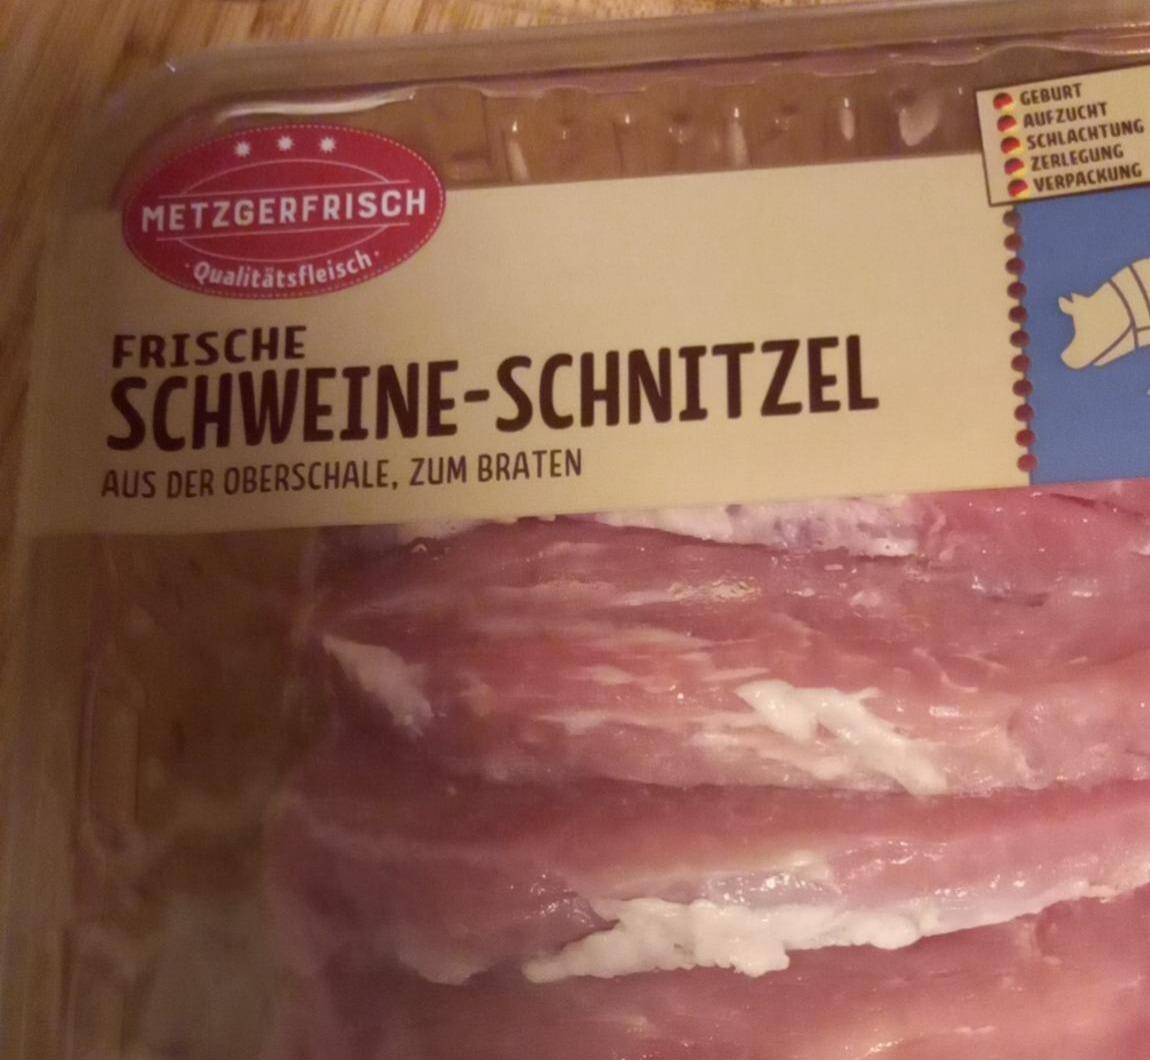 hodnoty Metzgerfrisch kalorie, nutriční kJ - a Frische Schweine-Schnitzel